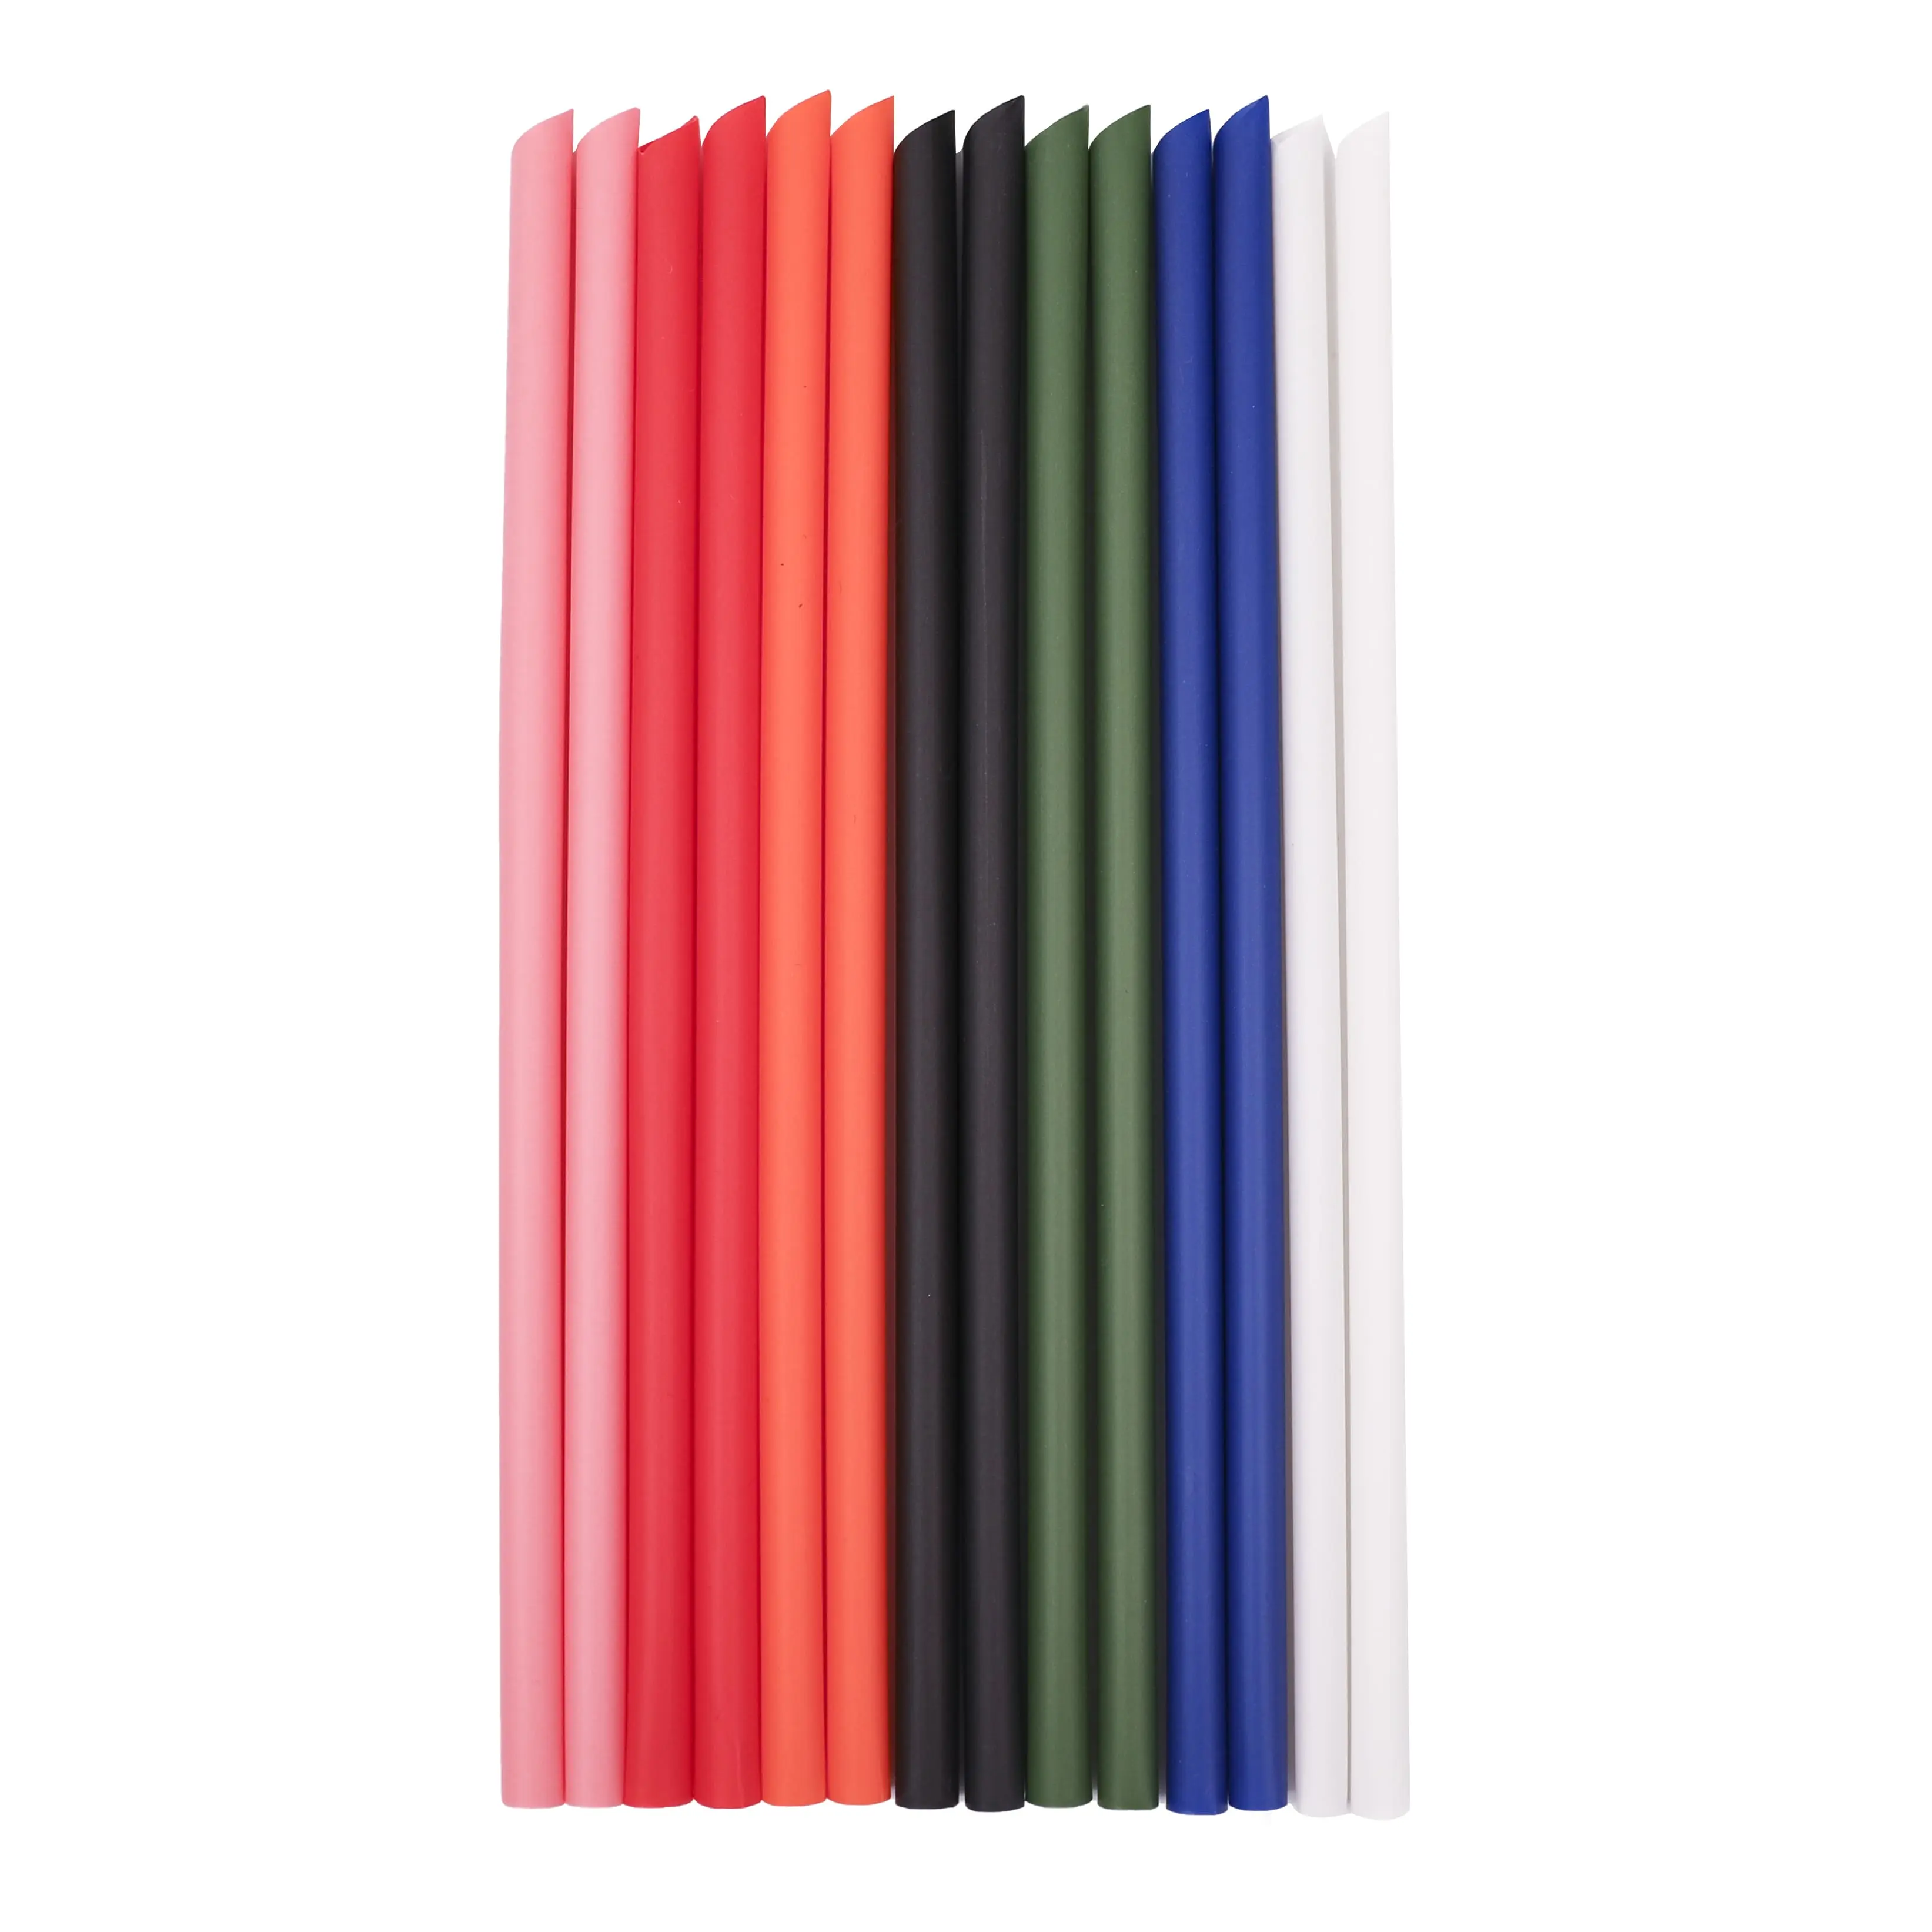 Red PLA Straws Wholesale